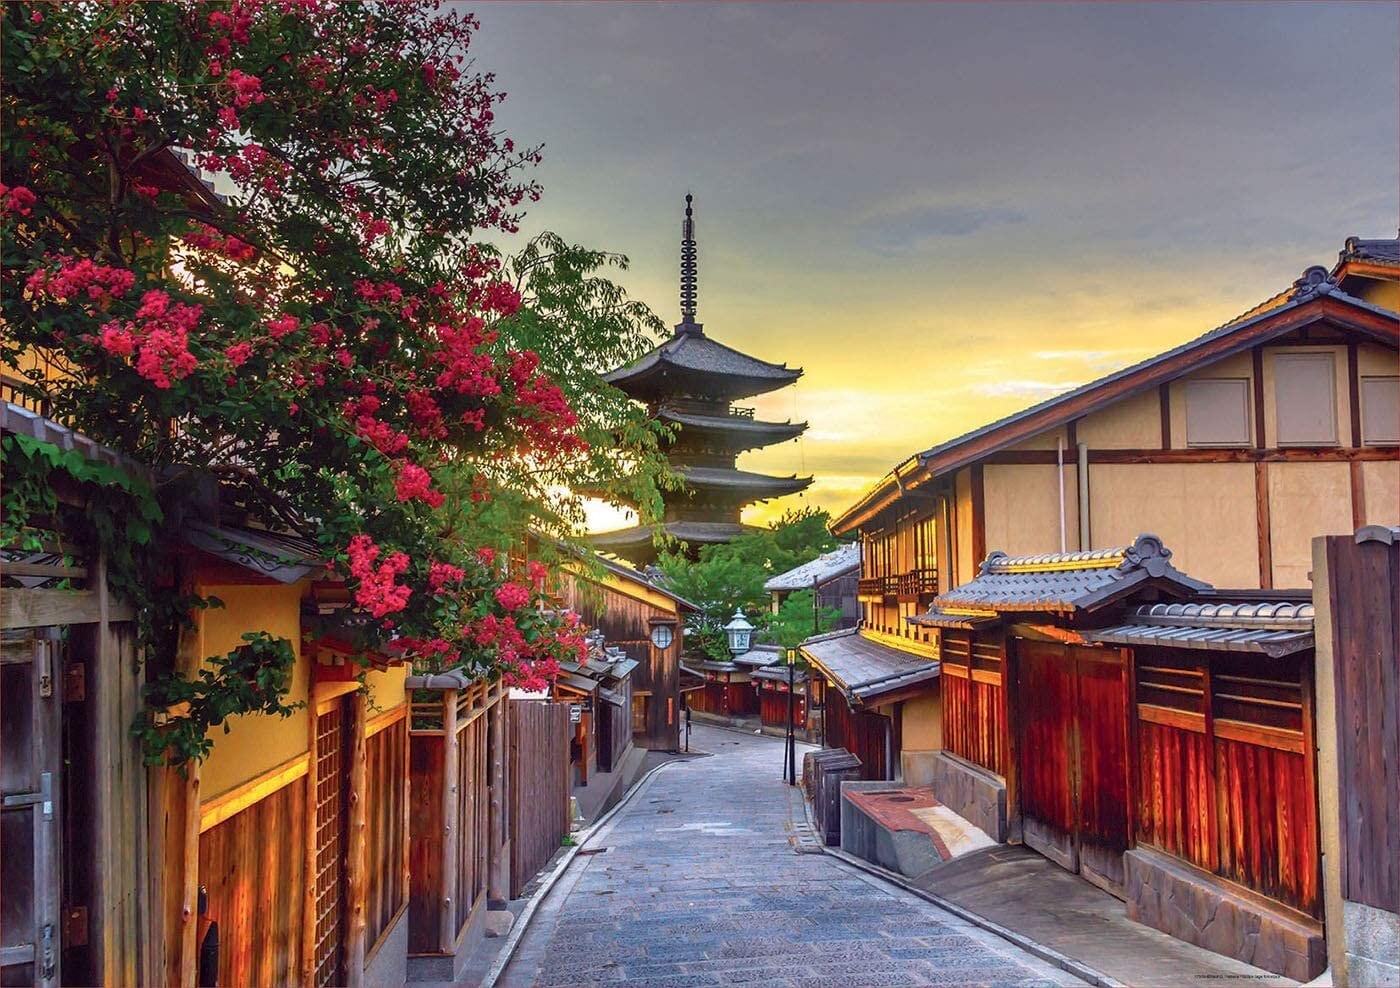 Educa Pussel, Yasaka Pagoda - Kyoto, Japan 1000 bitar